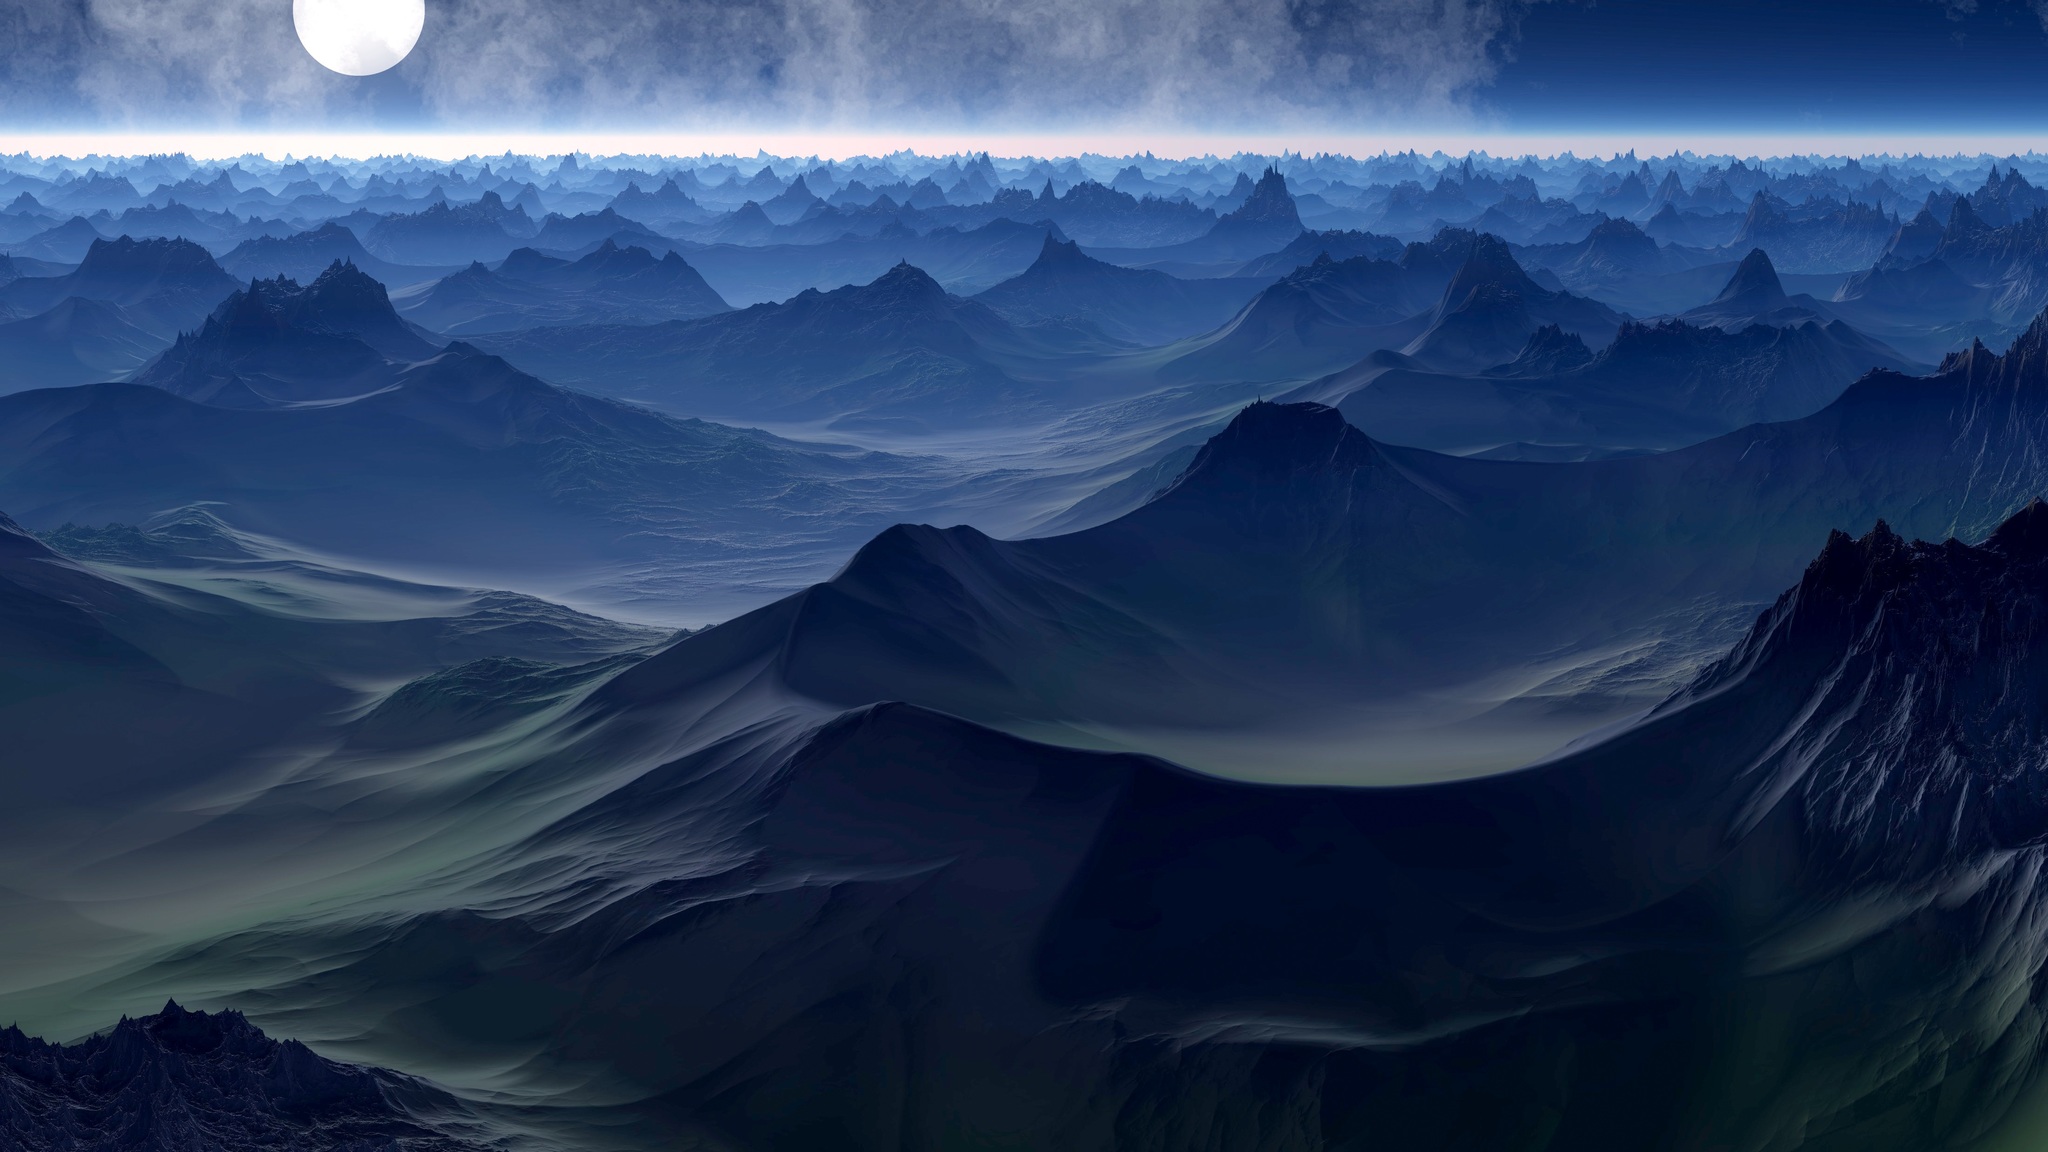 Fantasy Landscape Mountains In Fantasy World 5k J4 - Daniel Suarez Sci Fi Writer , HD Wallpaper & Backgrounds